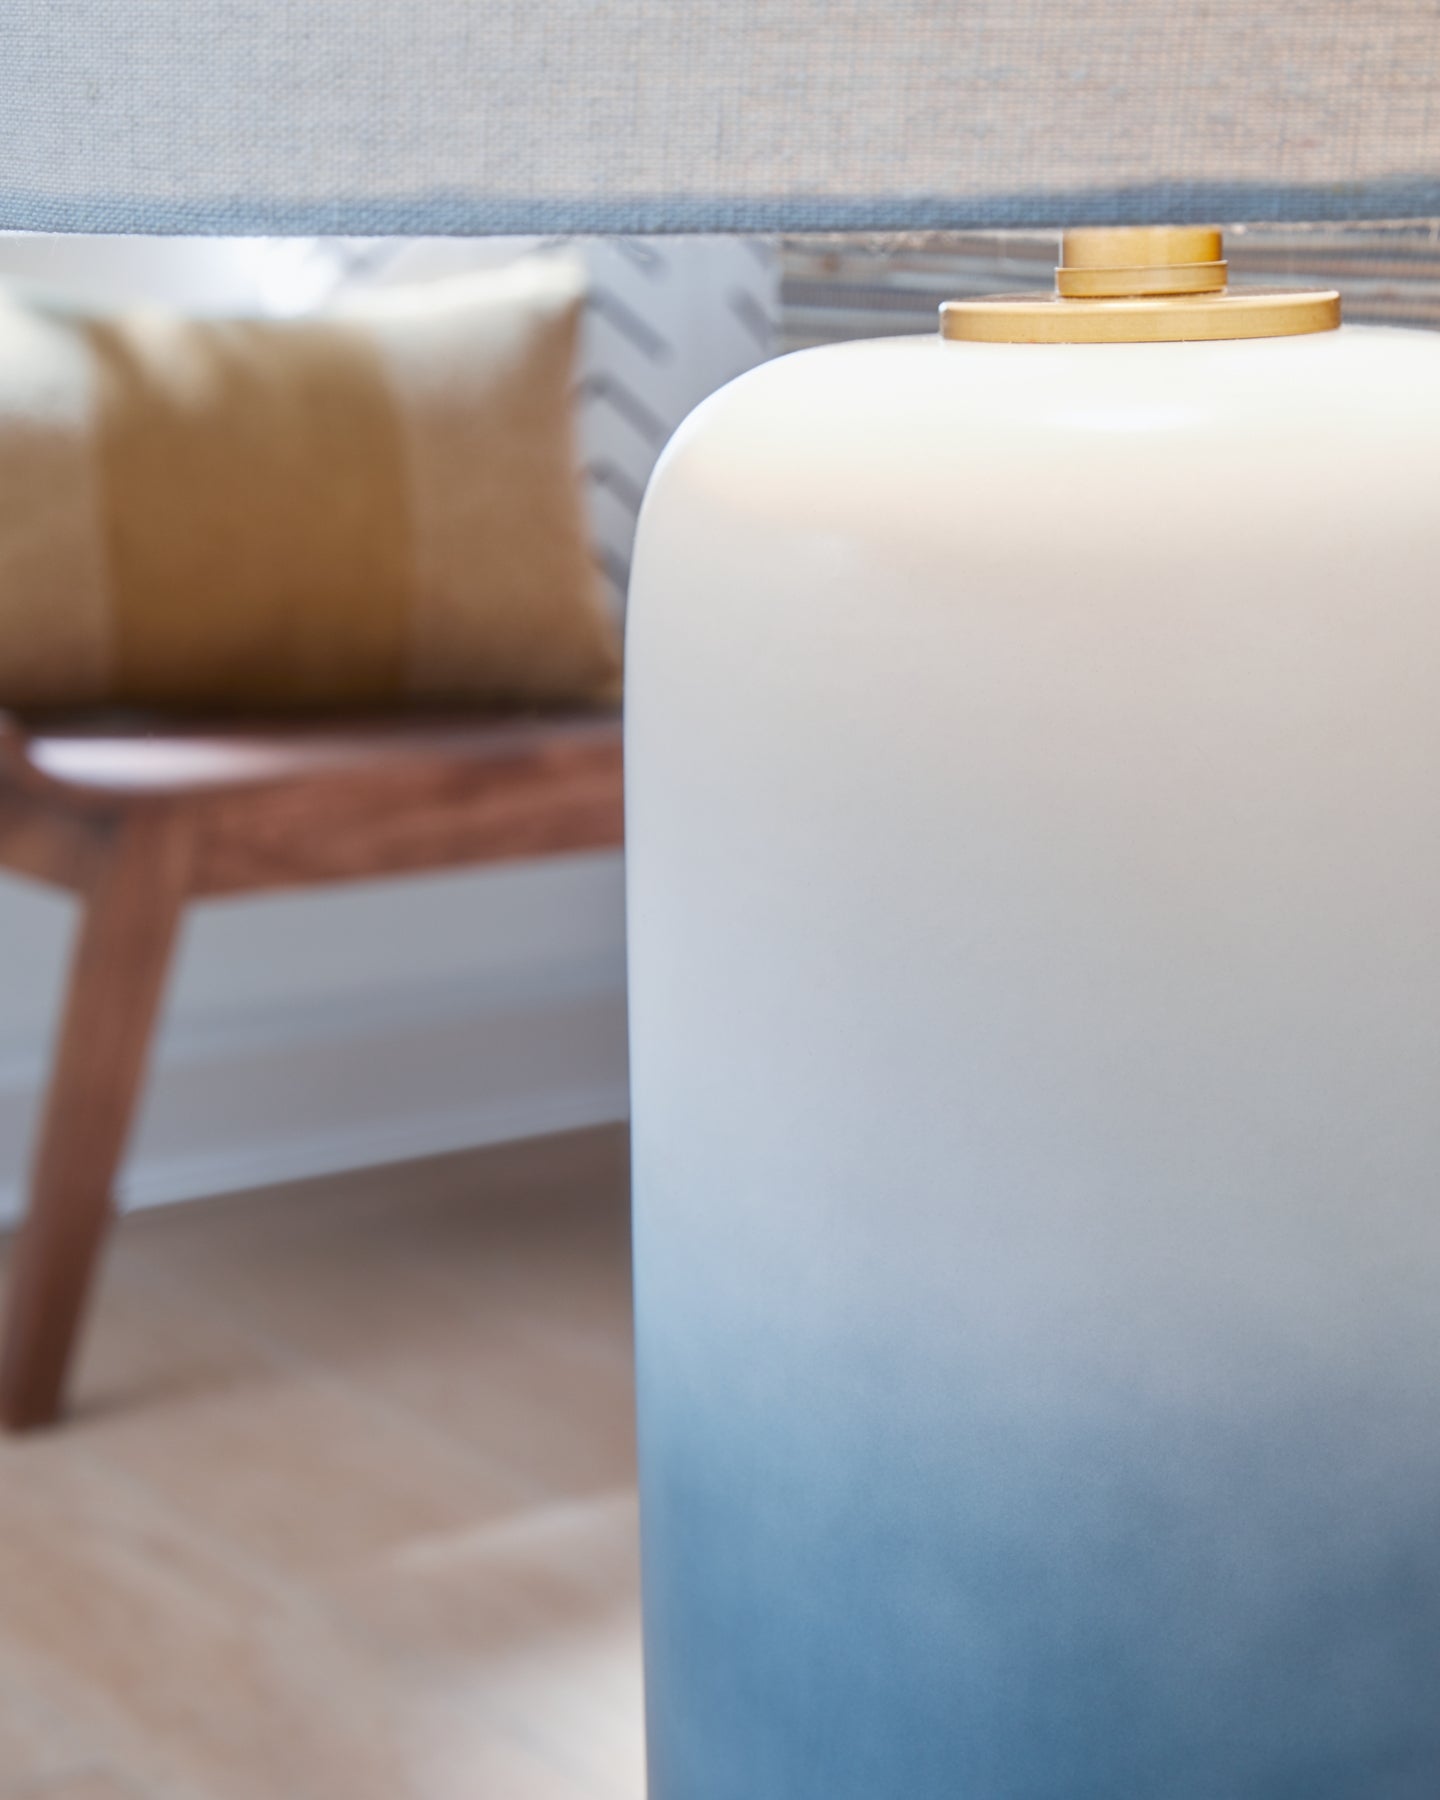 Lemrich Ceramic Table Lamp (1/CN) at Cloud 9 Mattress & Furniture furniture, home furnishing, home decor